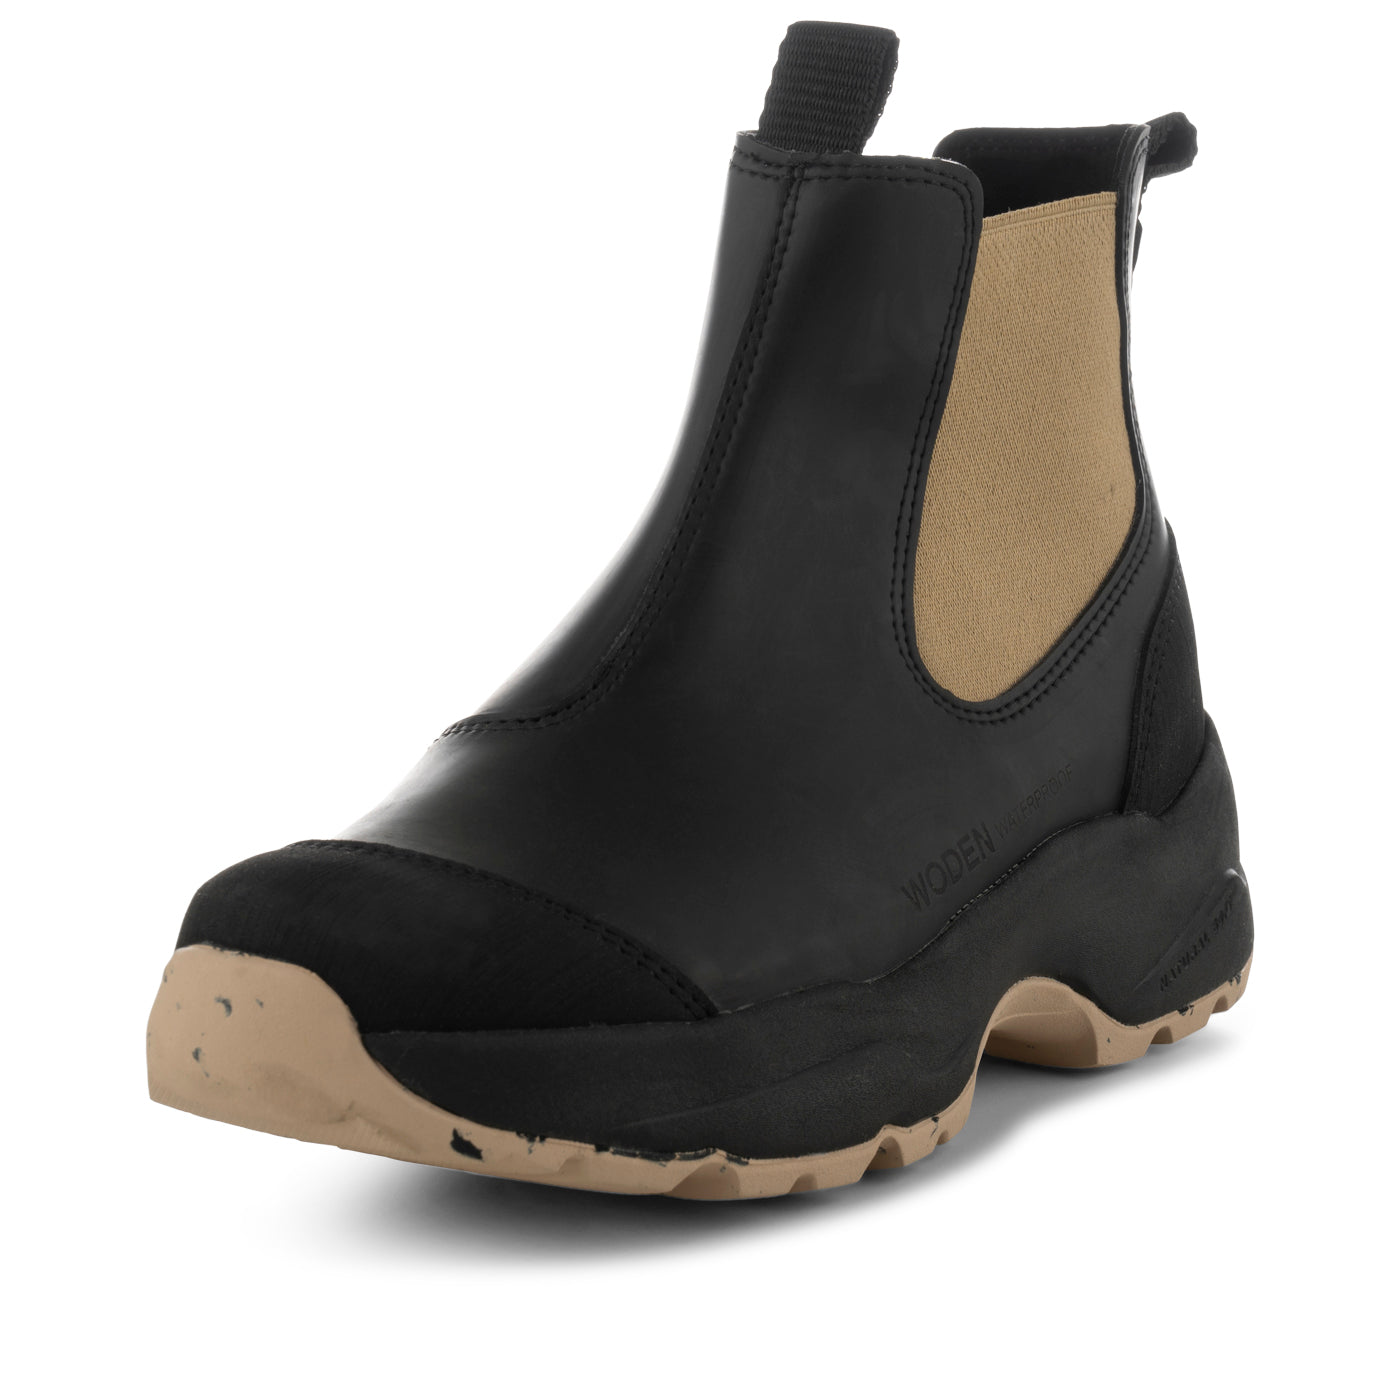 WODEN Siri Waterproof Rubber Boots 020 Black